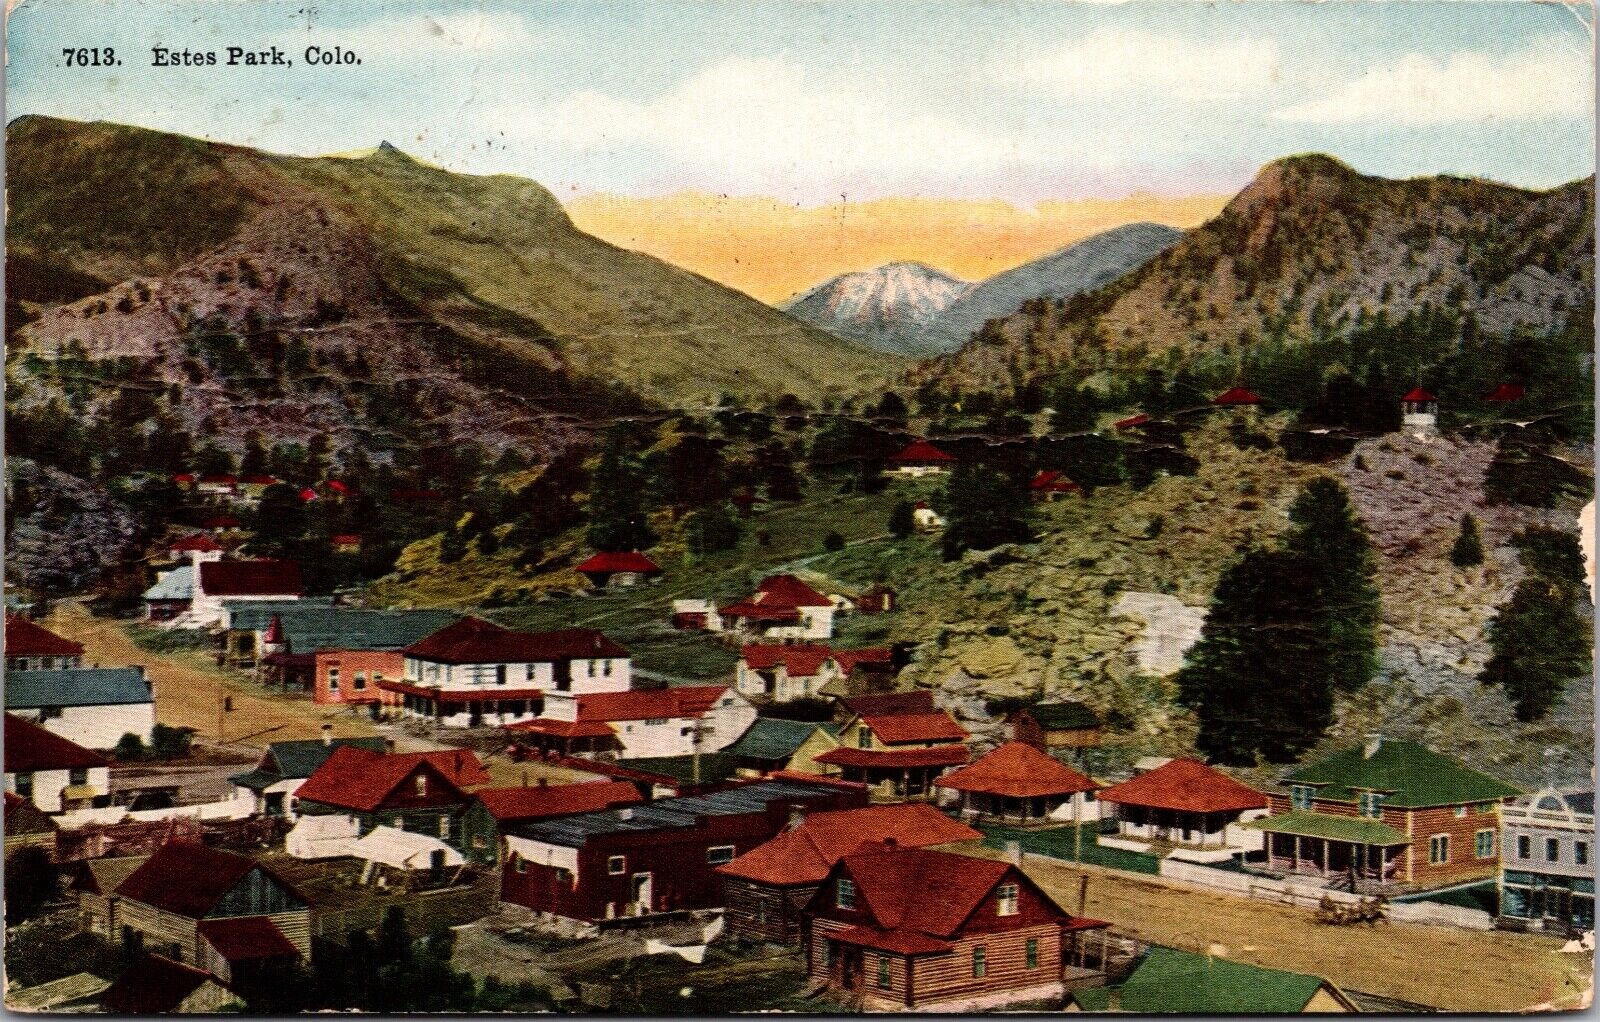 Postcard Overview of Estes Park, Colorado